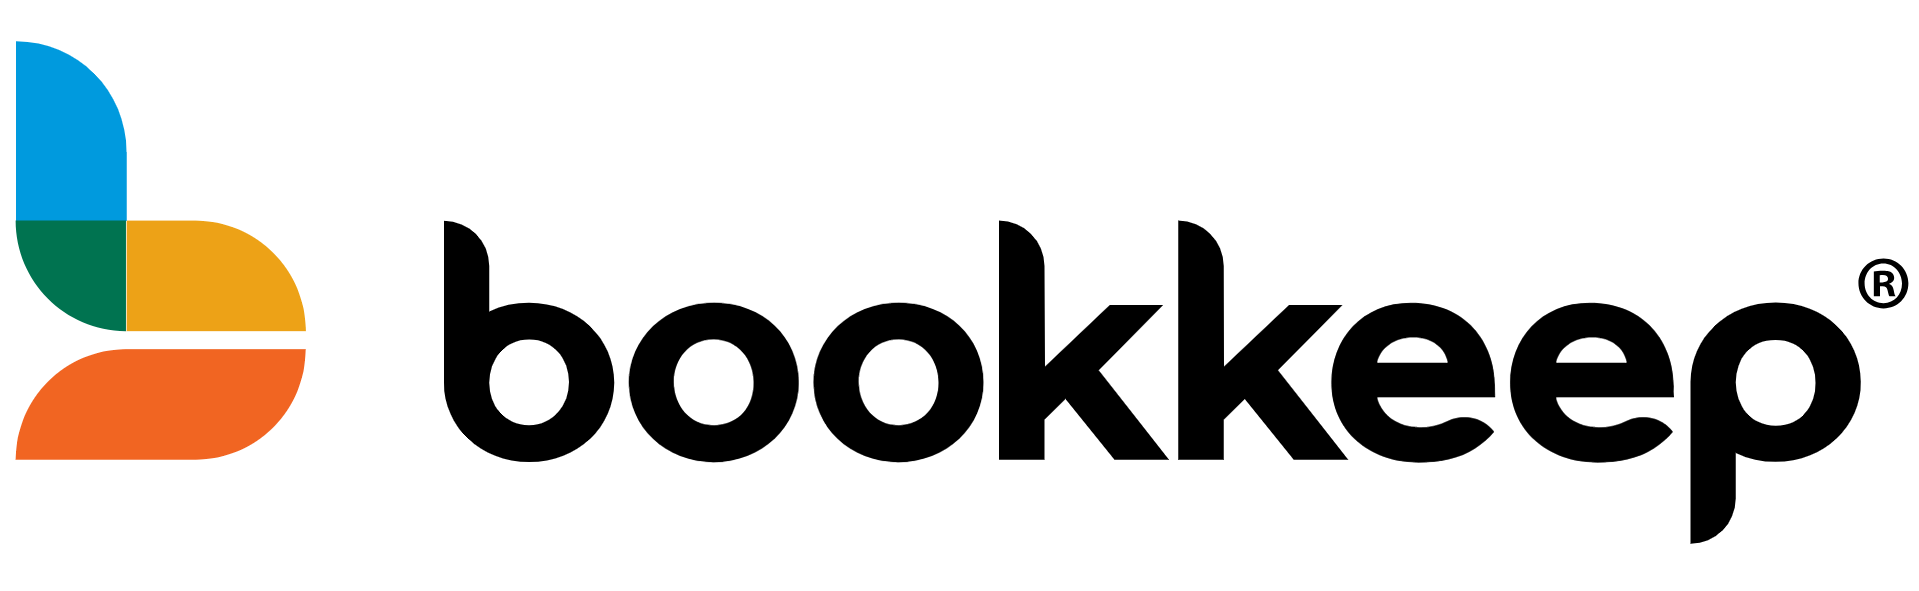 bookkeep logo